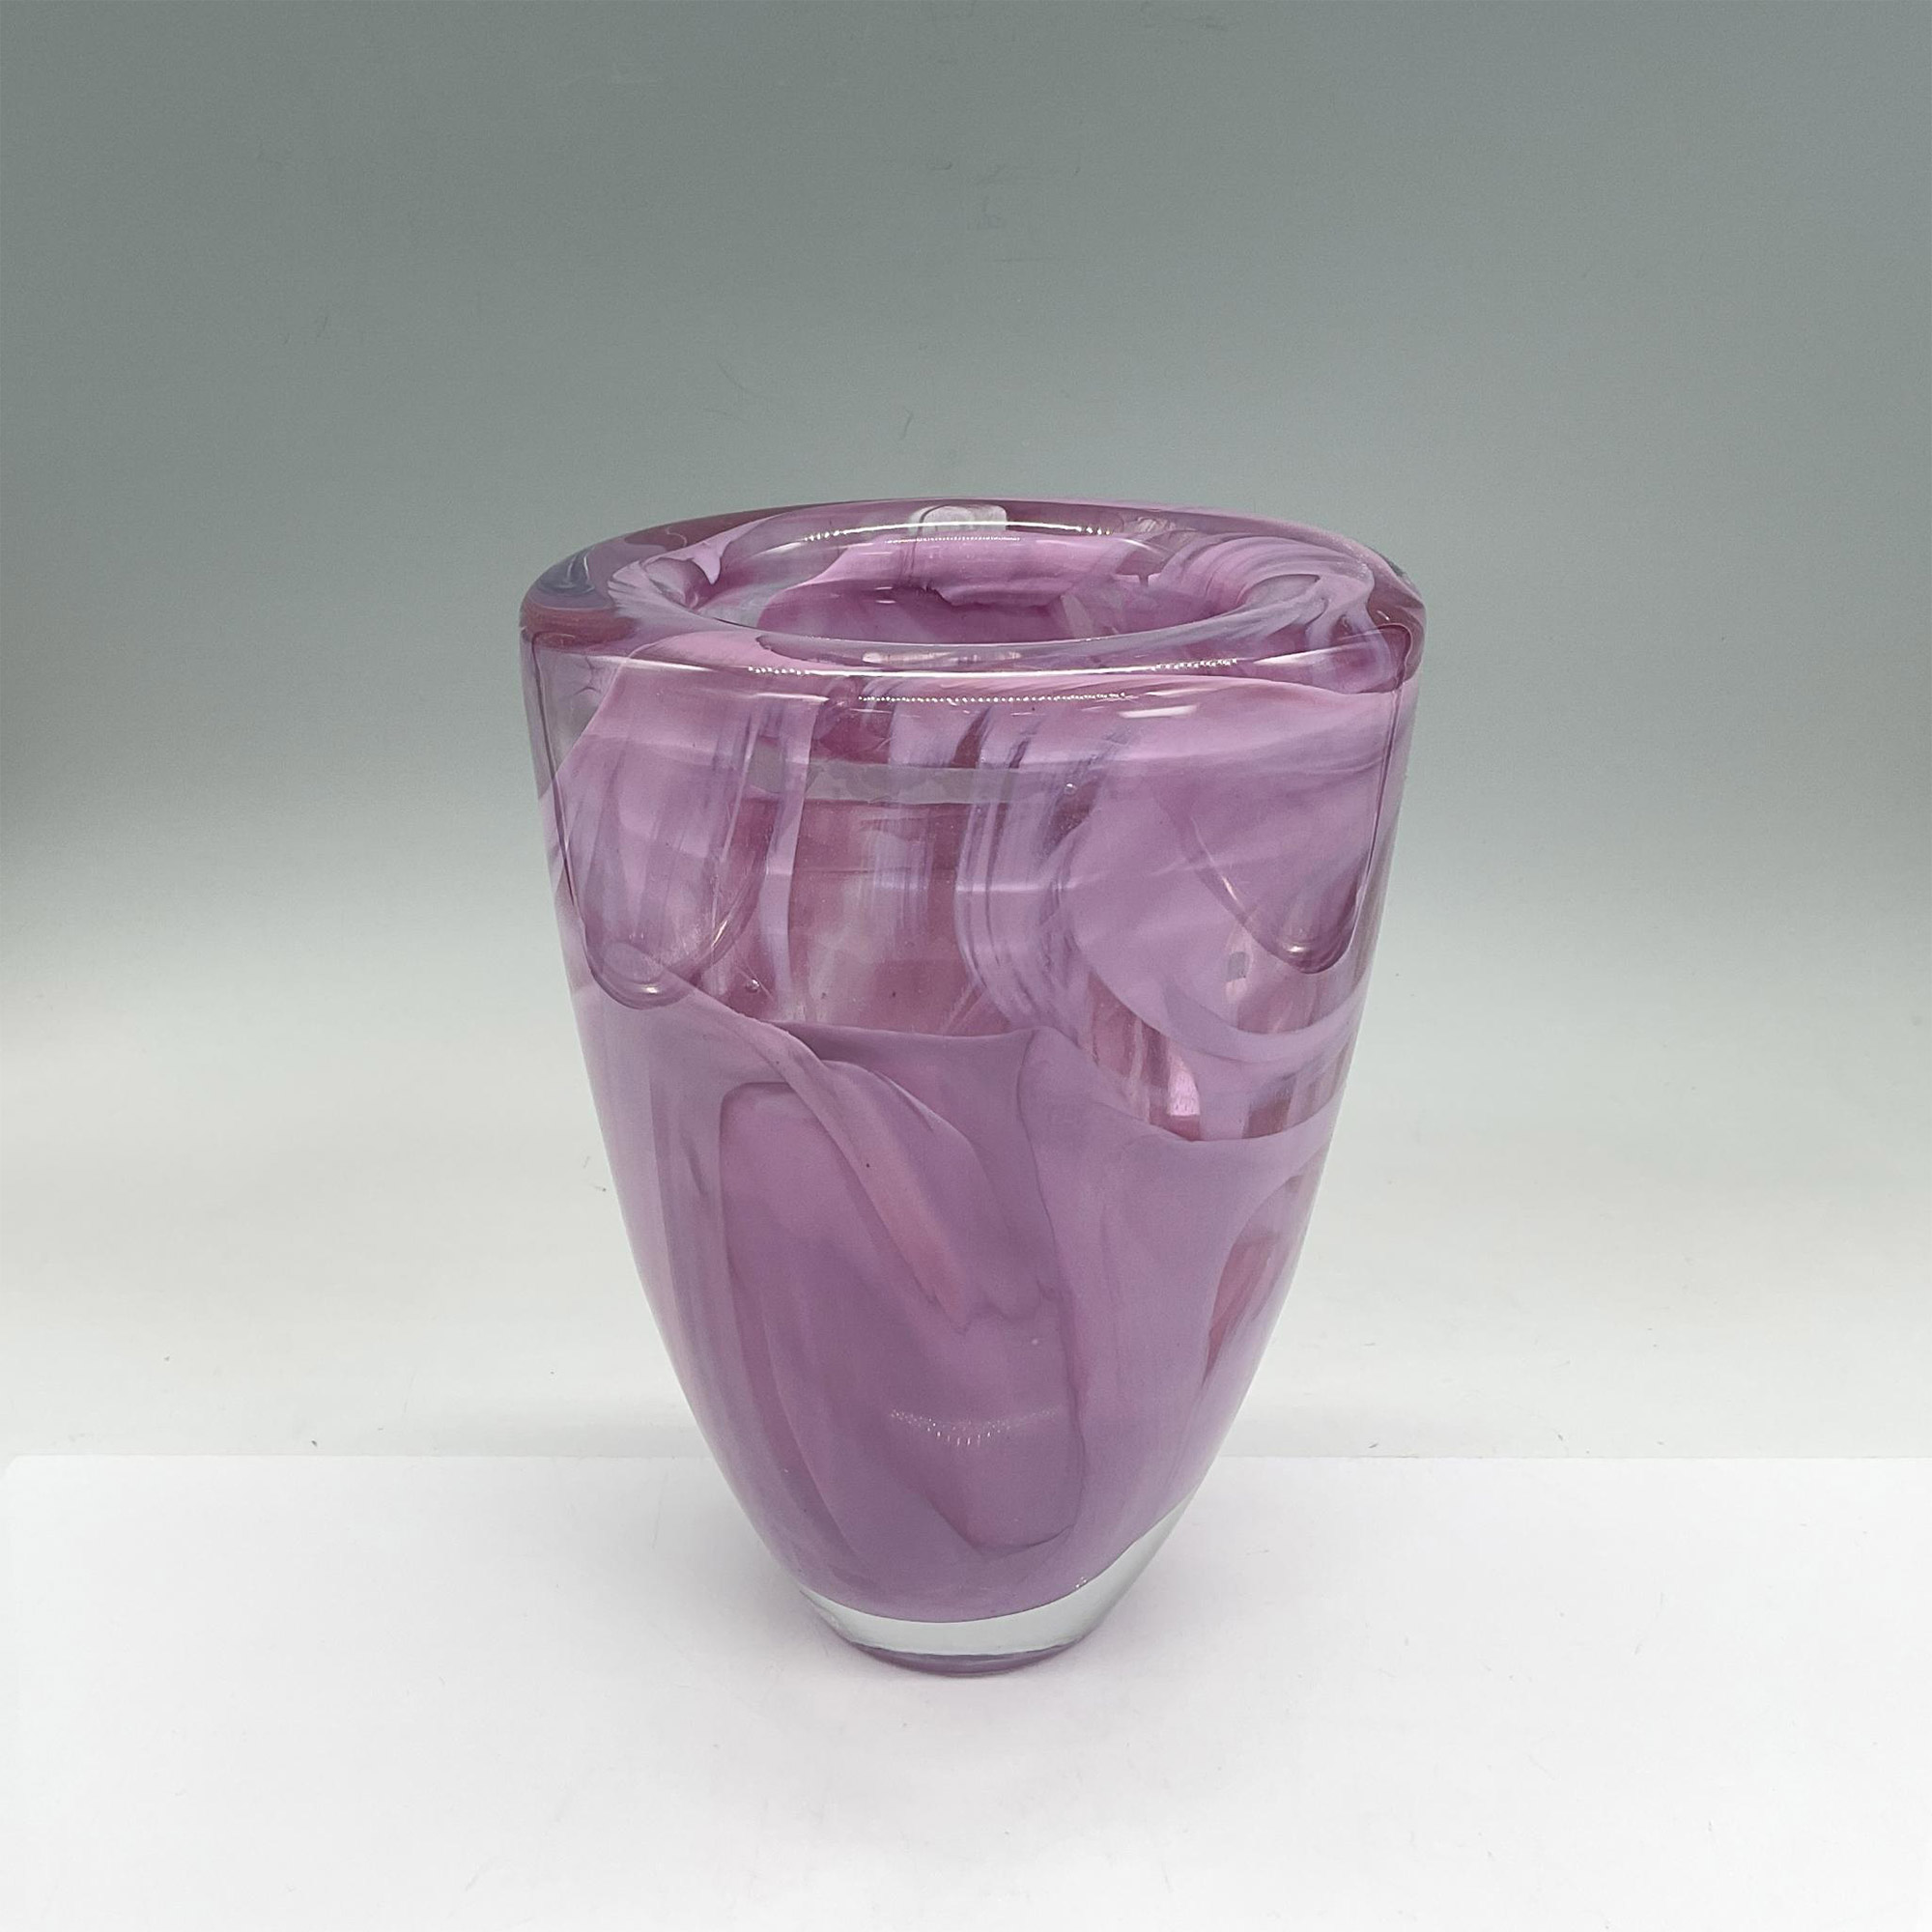 Kosta Boda Glass Vase, Pink Swirl - Image 2 of 3